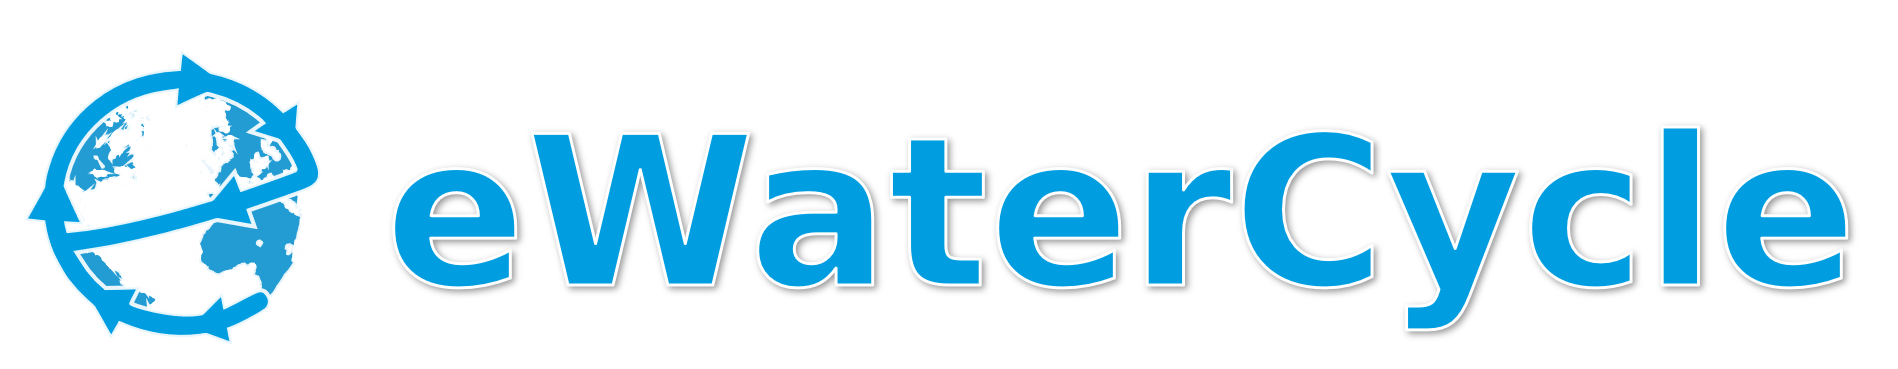 Logo of ewatercycle